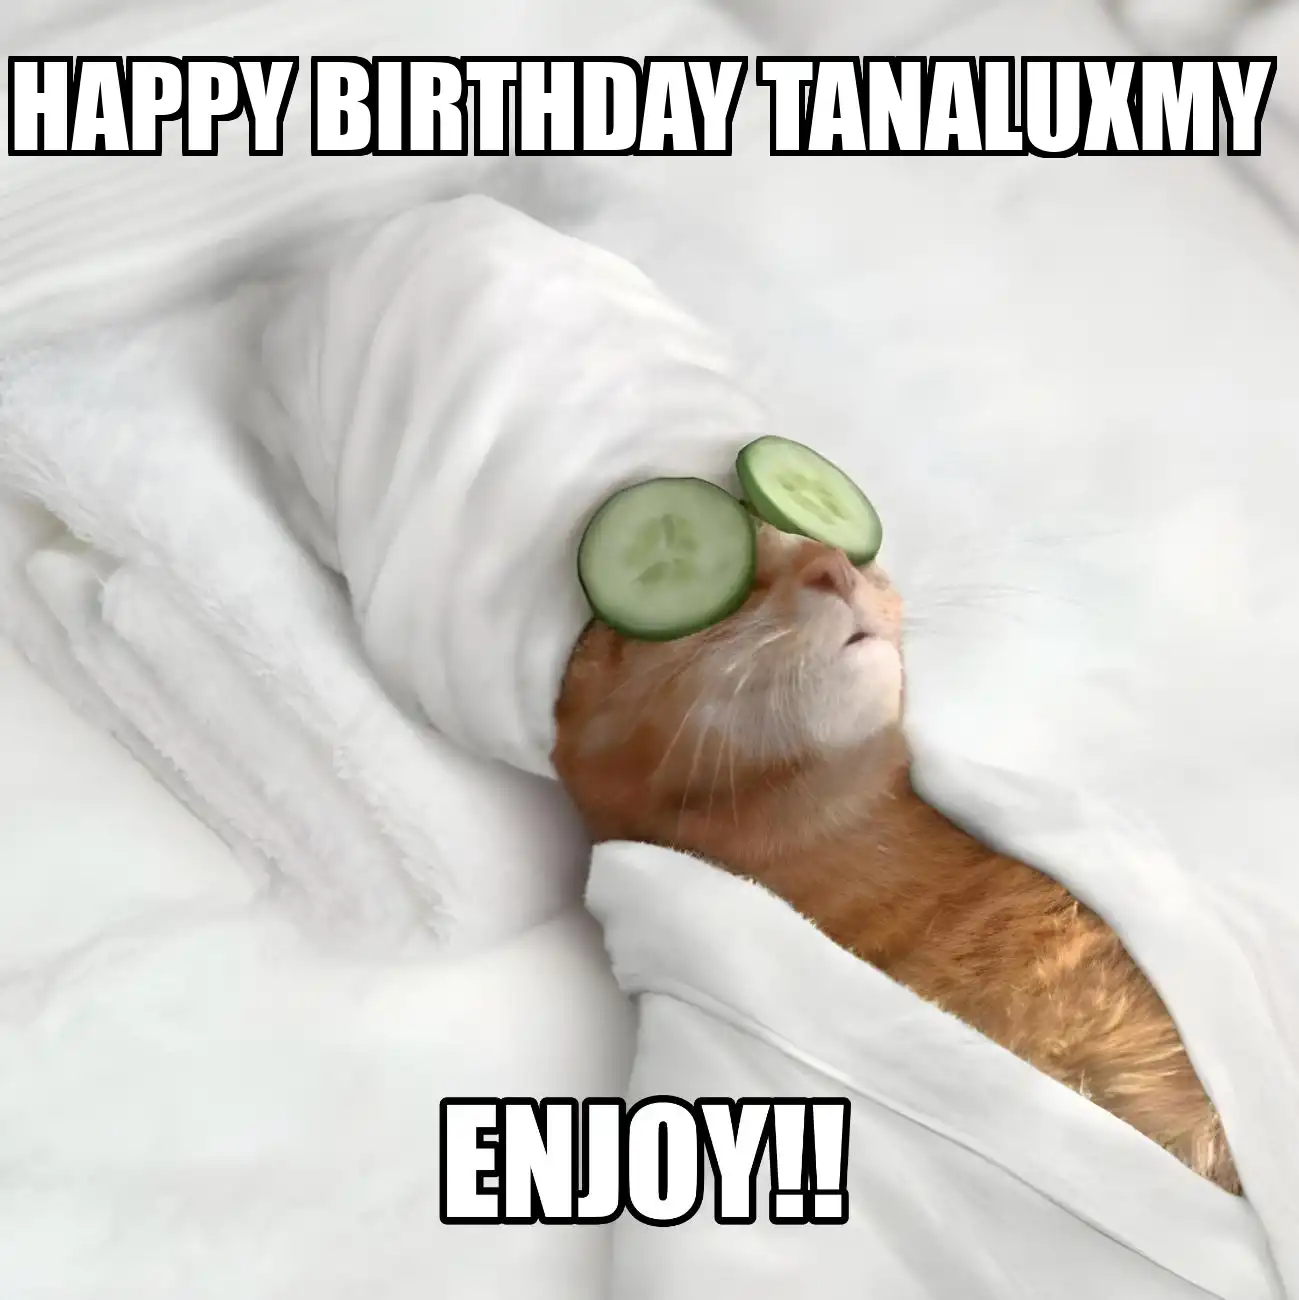 Happy Birthday Tanaluxmy Enjoy Cat Meme